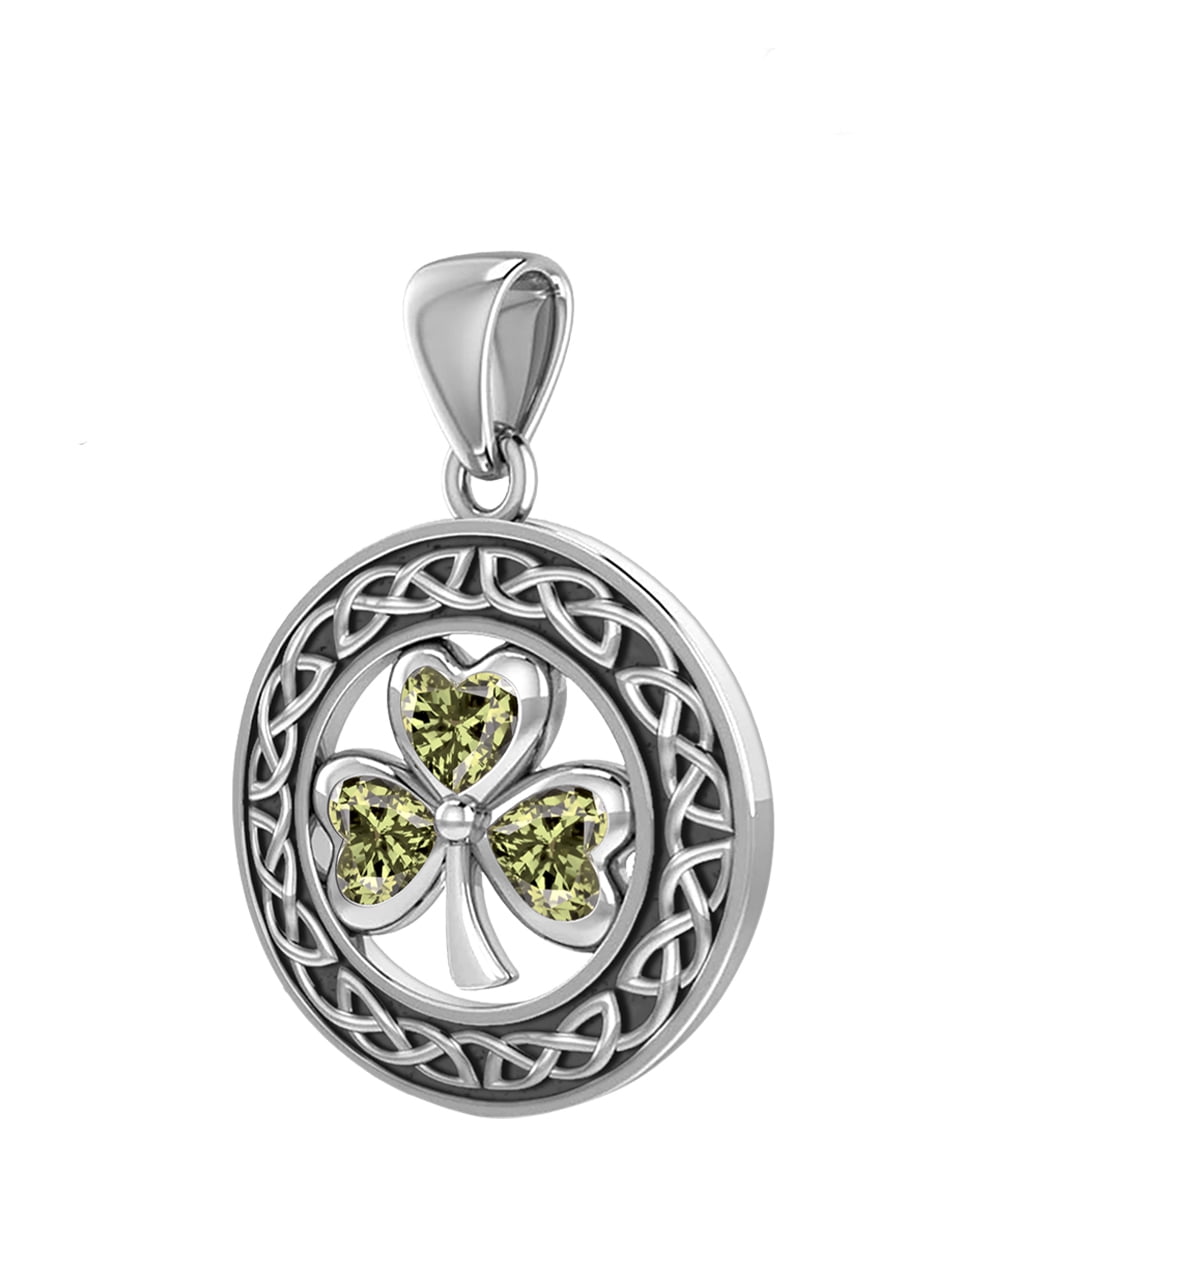 0.925 Sterling Silver Irish Shamrock Clover Genuine Peridot Pendant Necklace 